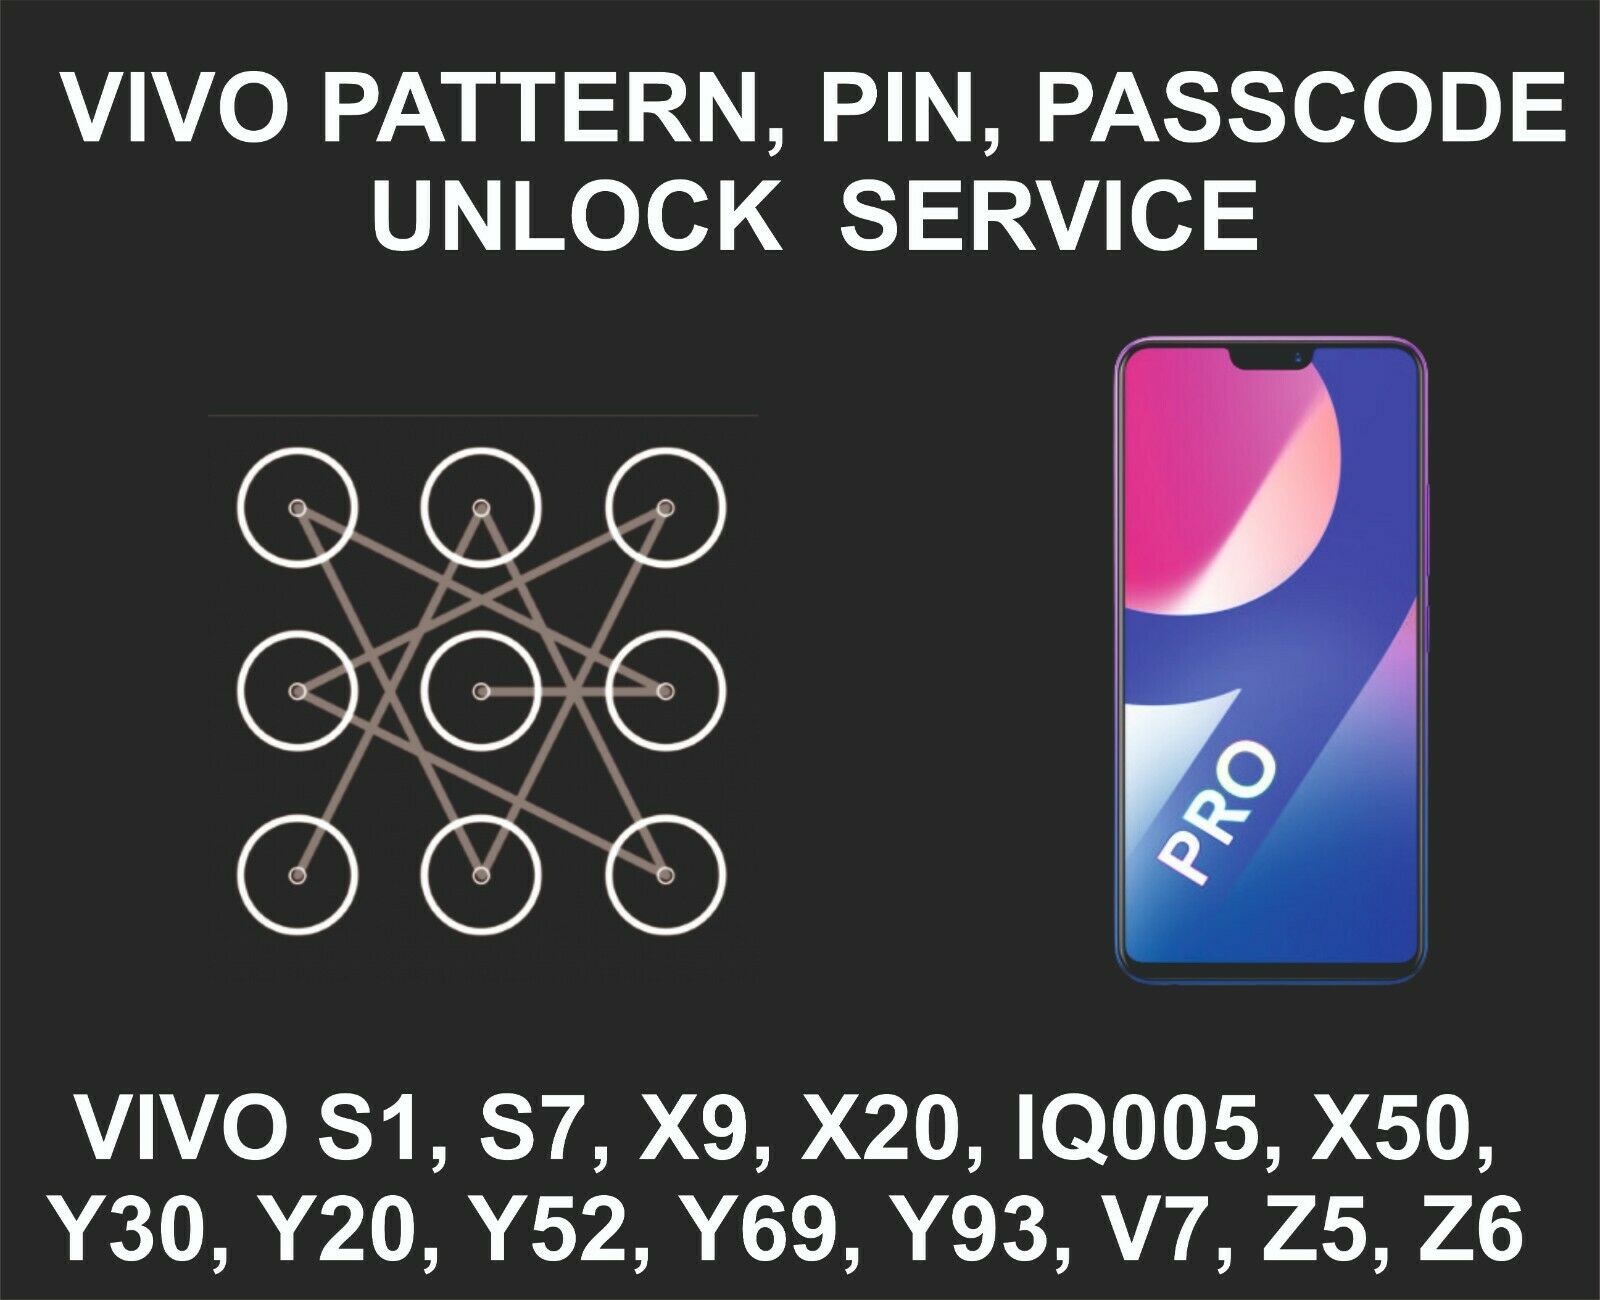 Vivo Pattern, Passcod Unlock Service, Vivo S1, S7, X9, X20, Iq005, X50, Y30, Y20